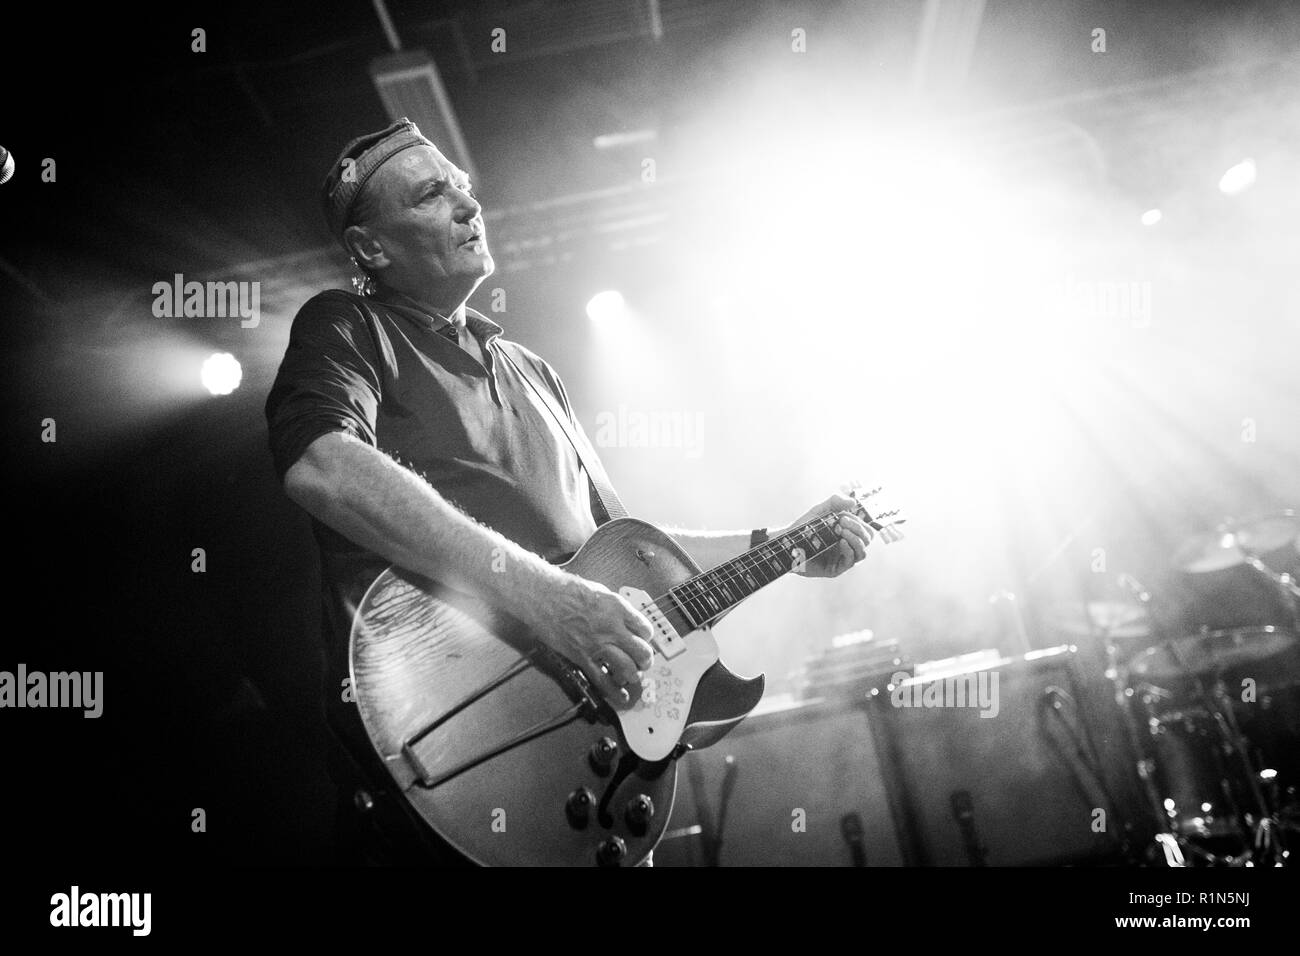 Matar broma (guitarrista Geordie Walker) - 4 Nov 2018 - Instituto de Northumbria Newcastle Foto de stock